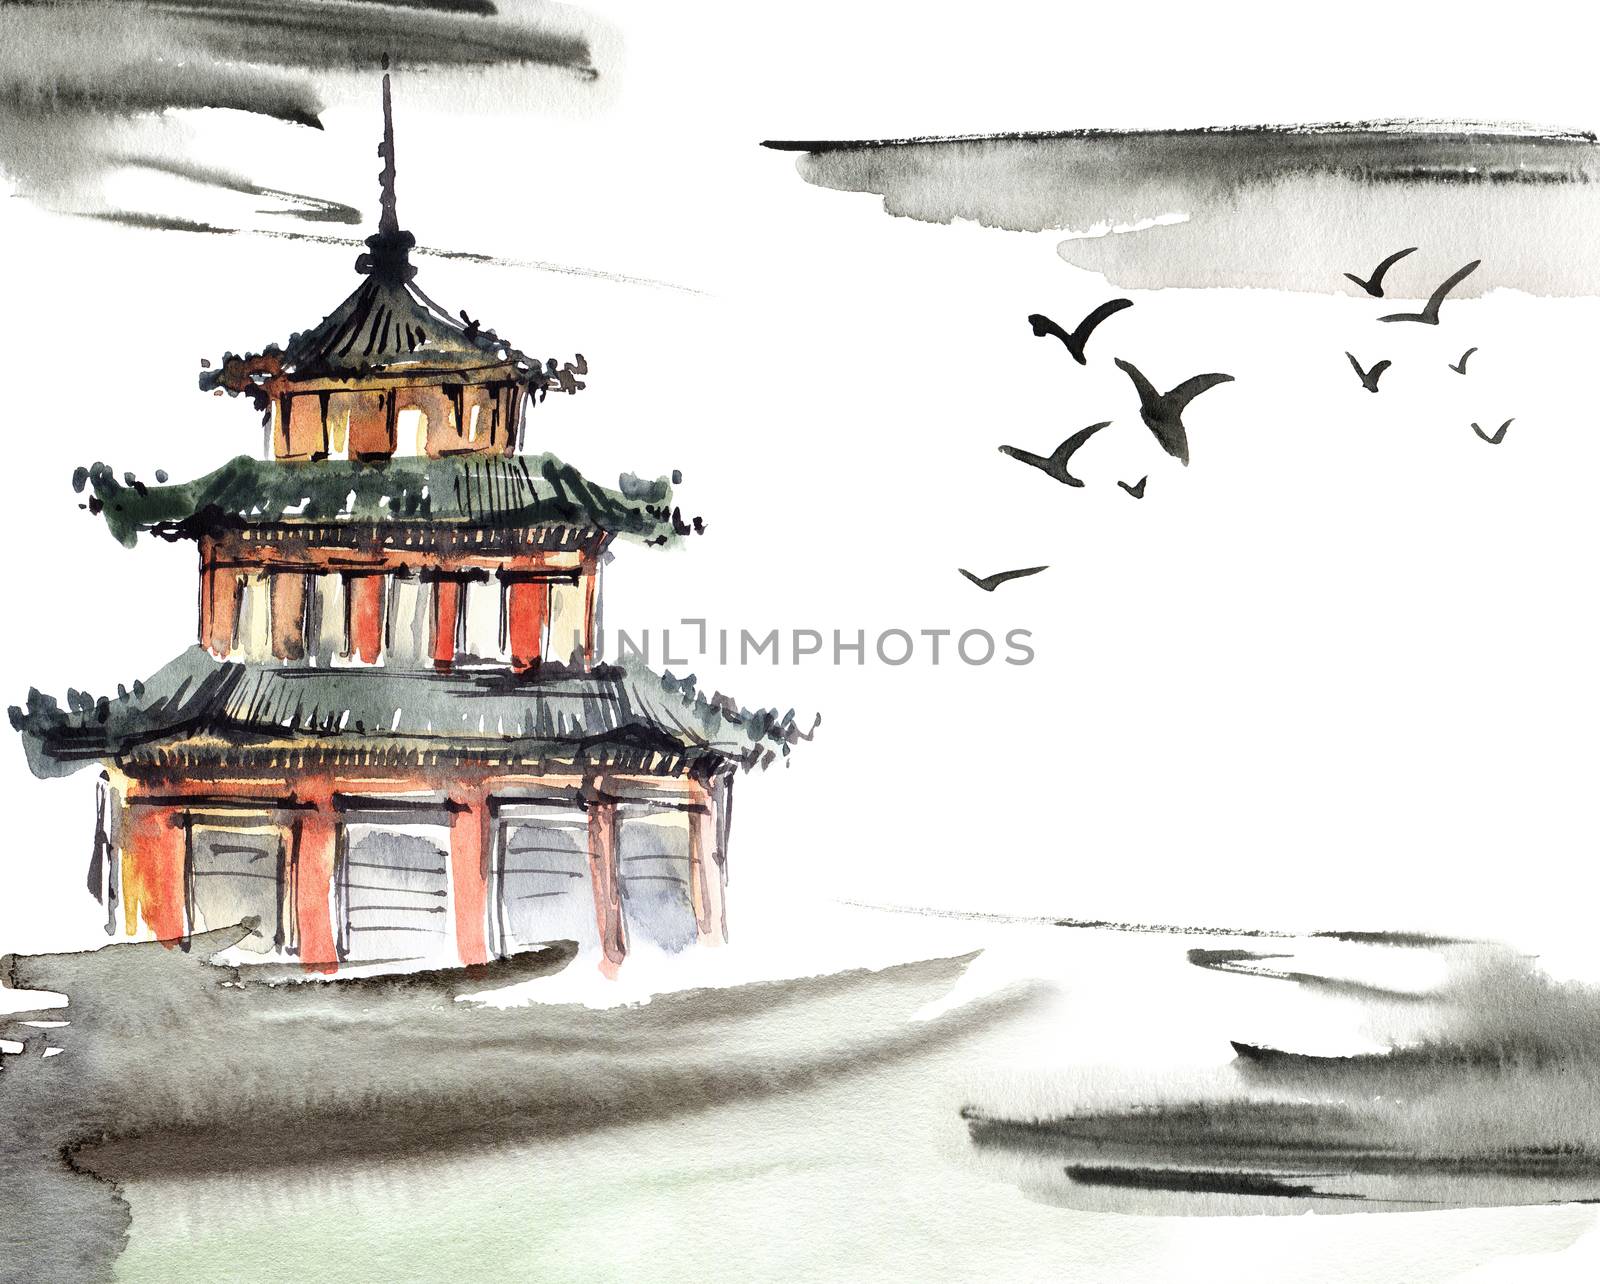 Watercolor painted chinese landscape by Olatarakanova